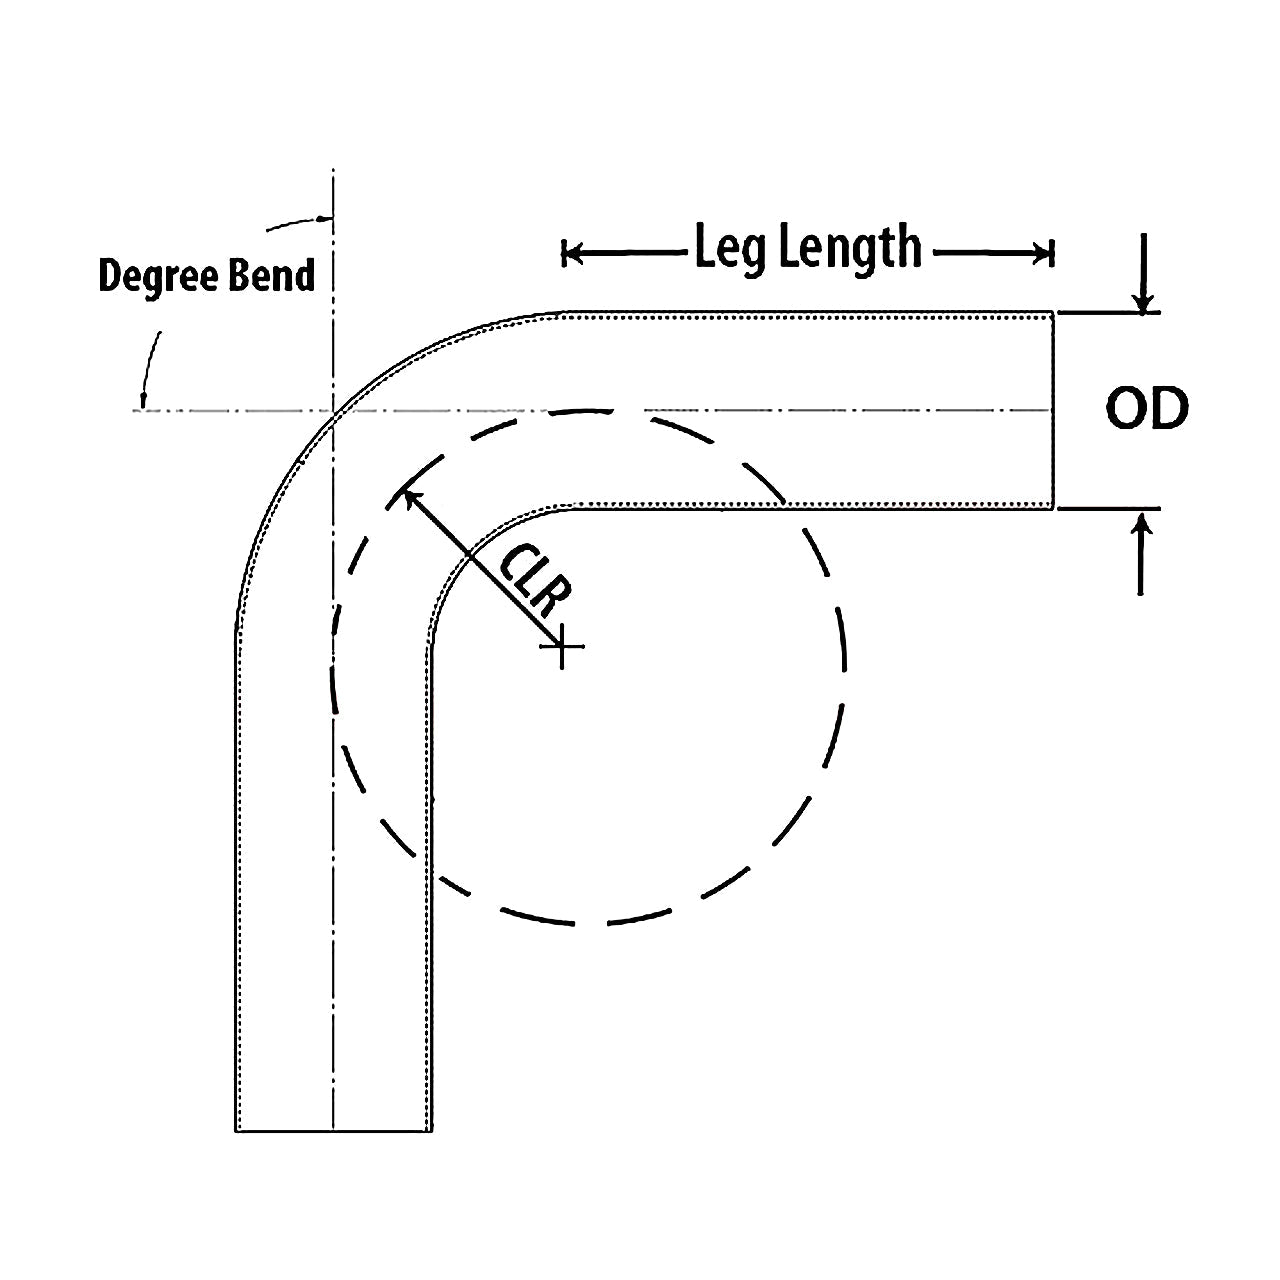 HPS 1-1/4" 90 Degree Bend 6061 Aluminum Elbow Pipe Tubing with 2" Center Line Radius